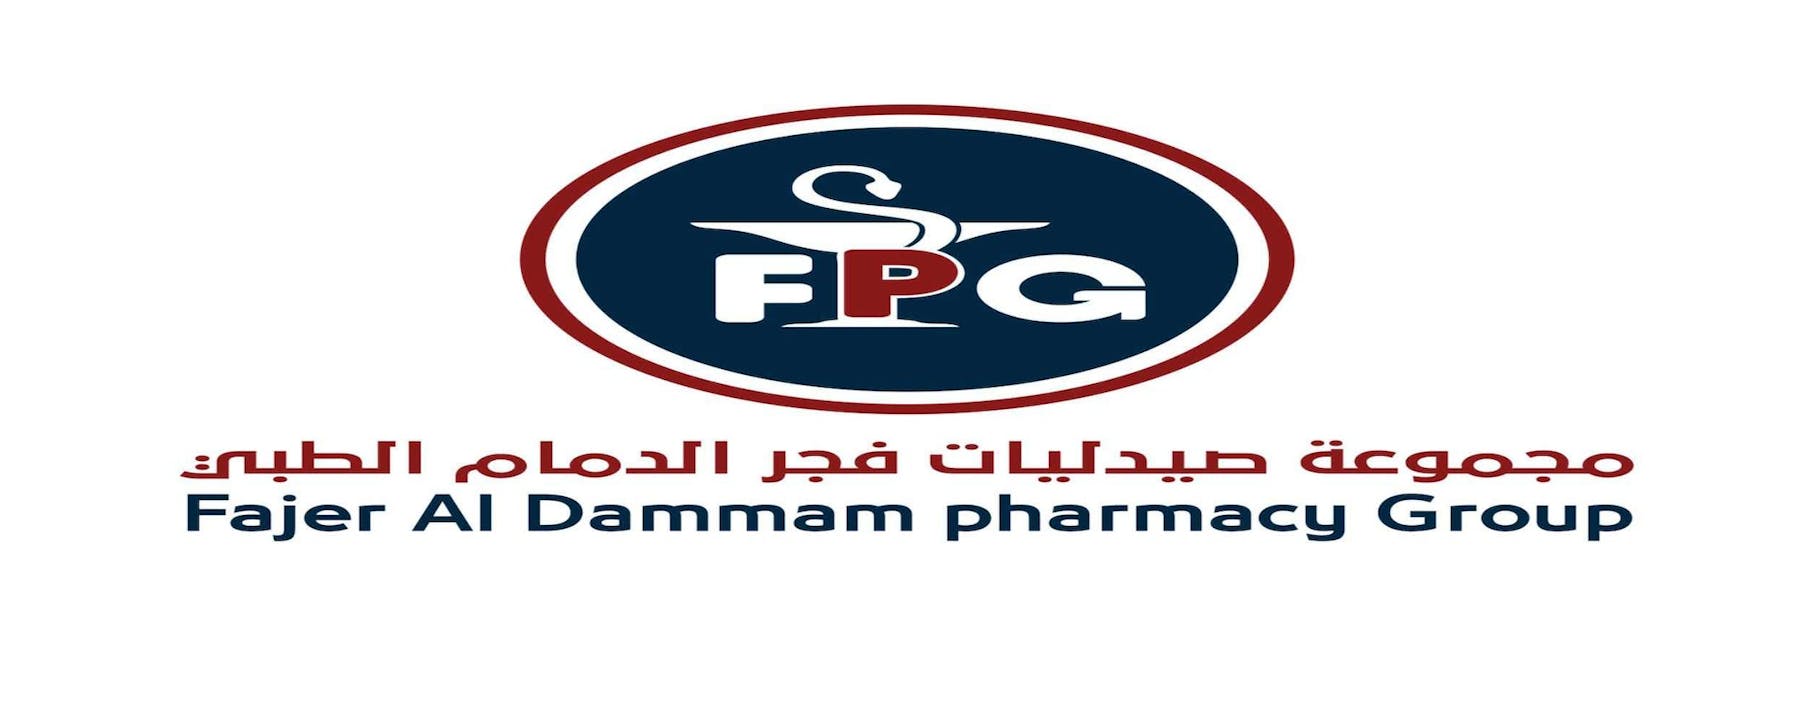 Fajer Al Dammam Pharmacy Group